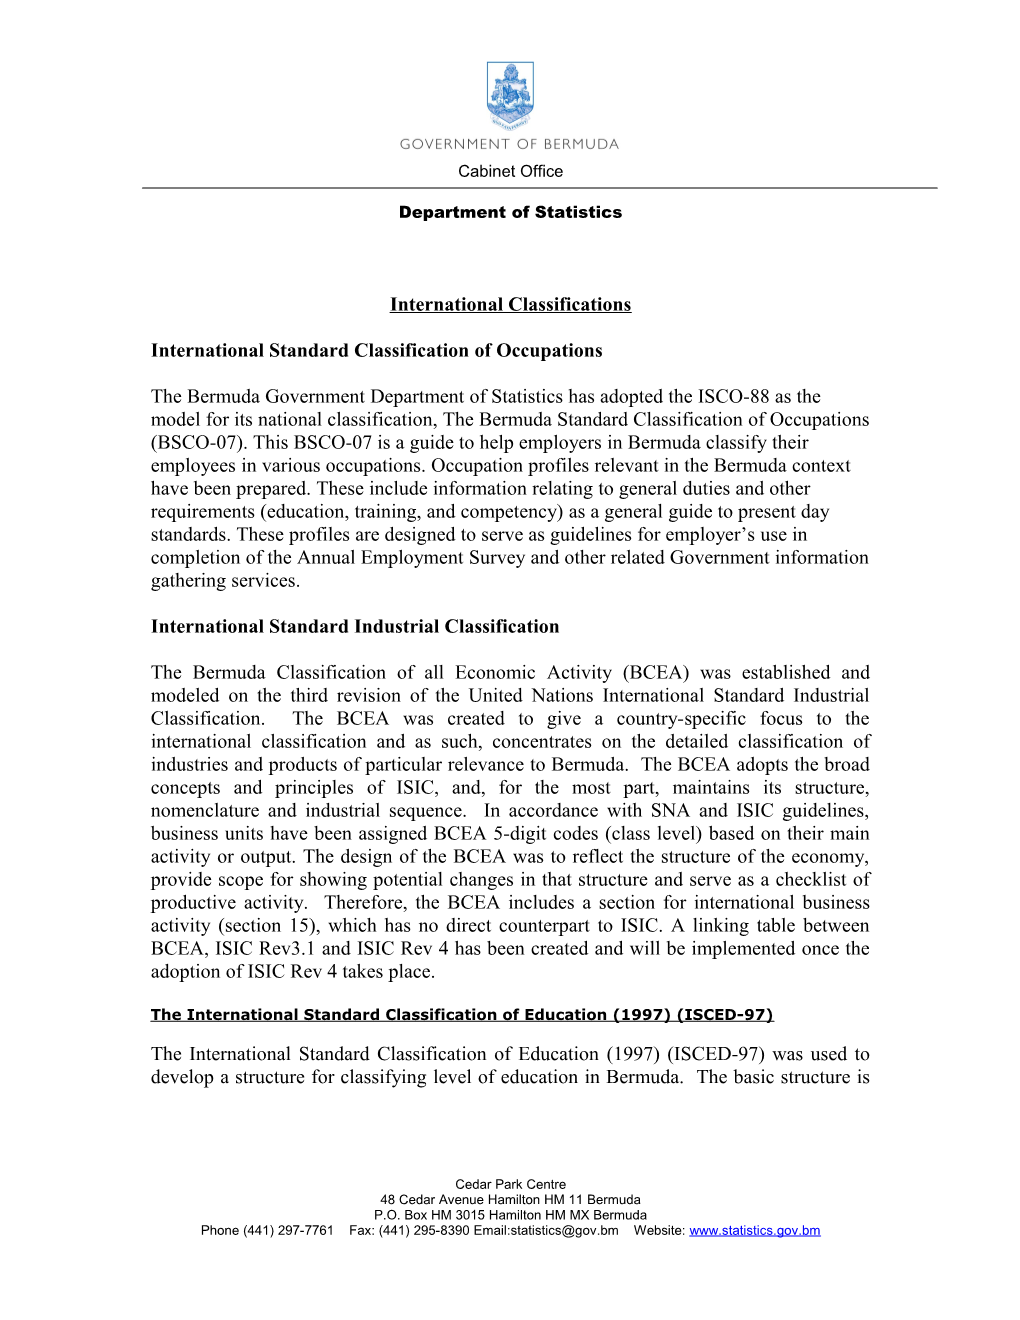 International Standard Classification of Occupations